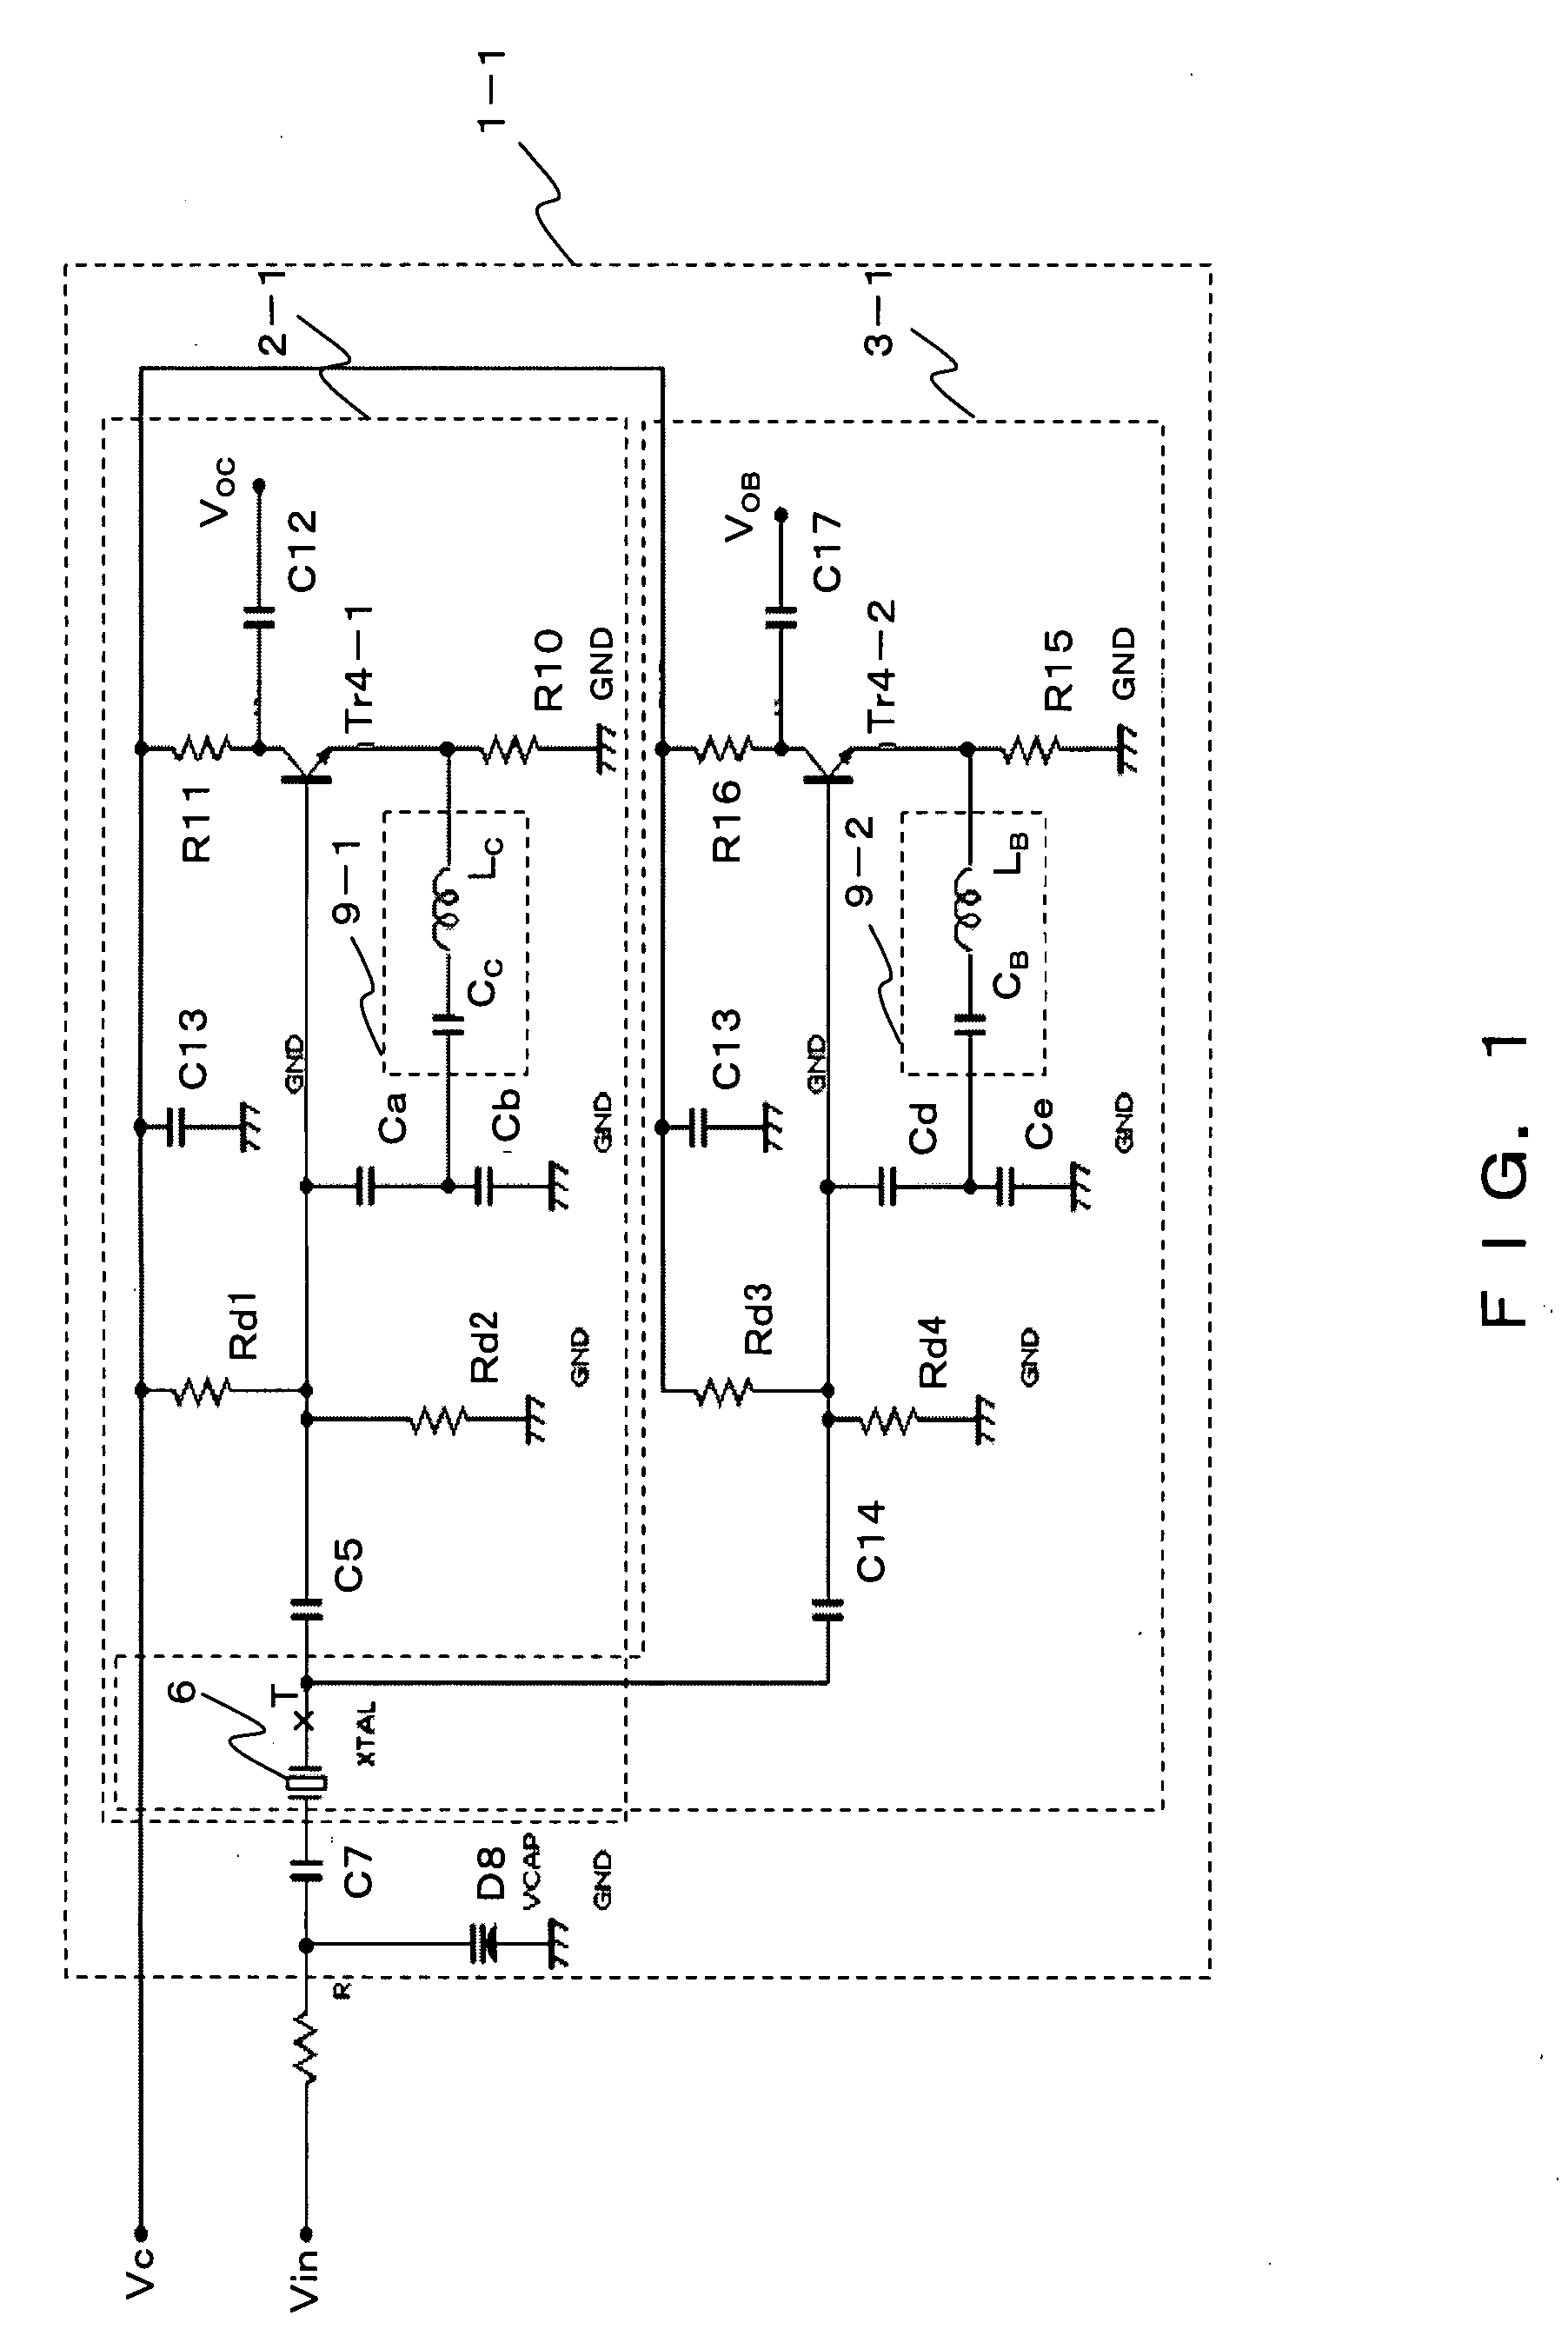 Dual mode quartz oscillation circuit